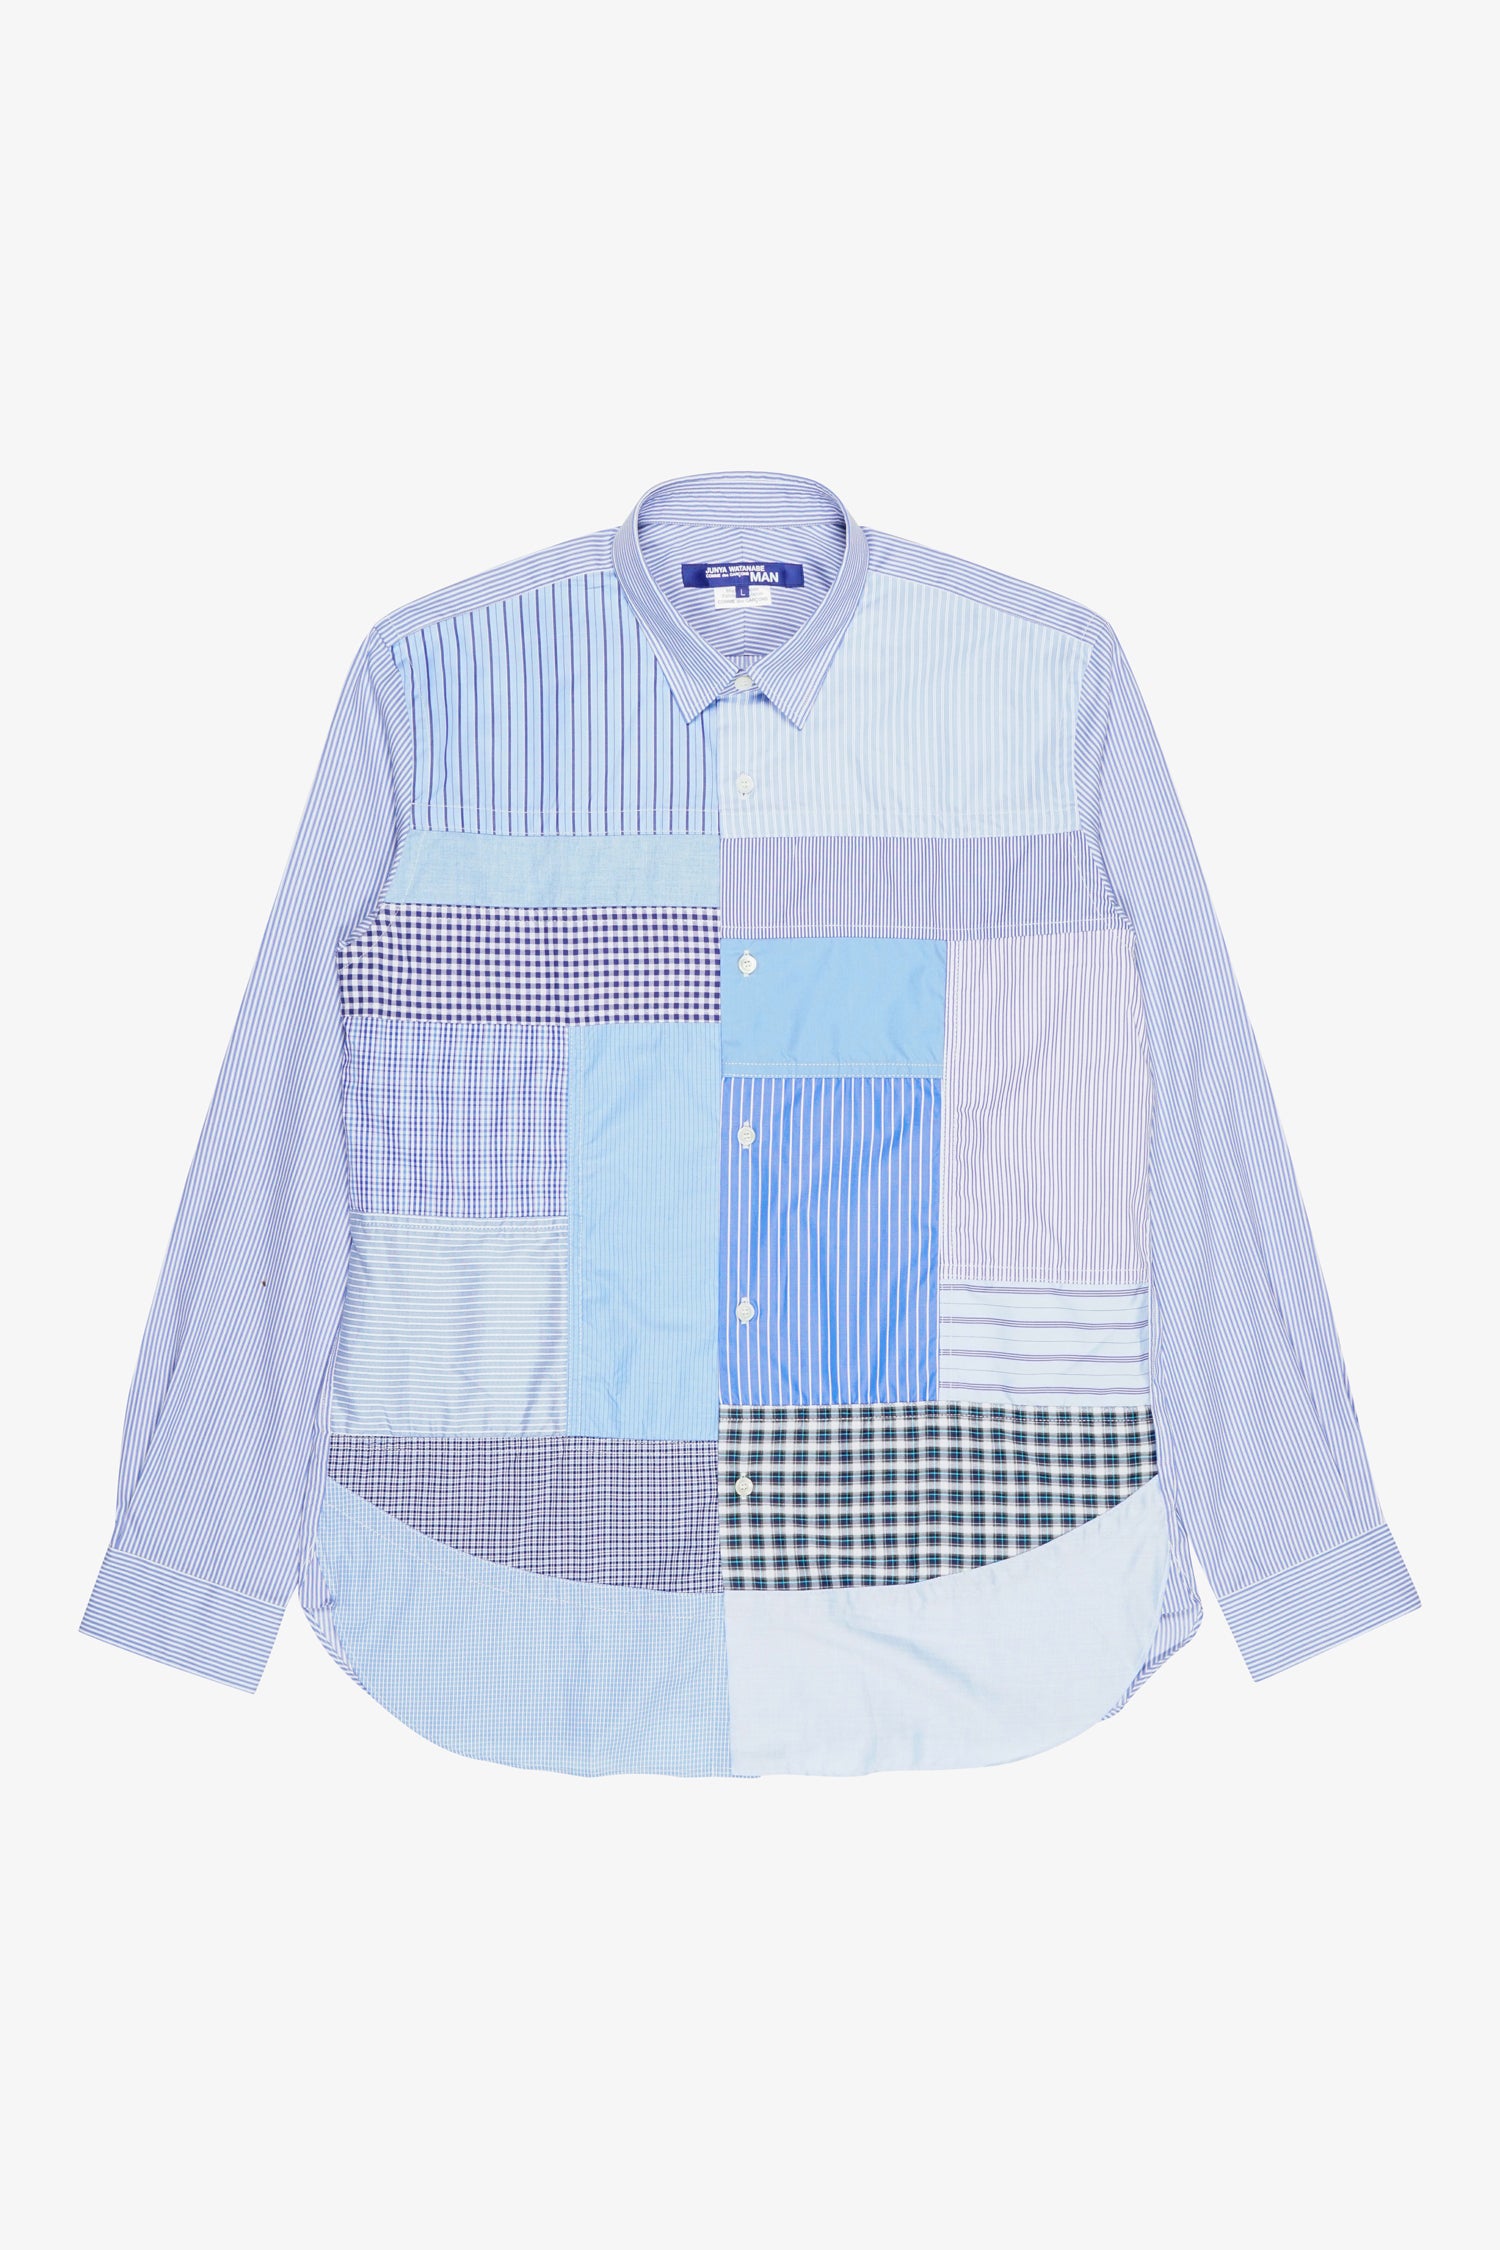 Selectshop FRAME - JUNYA WATANABE MAN Patchwork Oxford Shirt Shirts Dubai